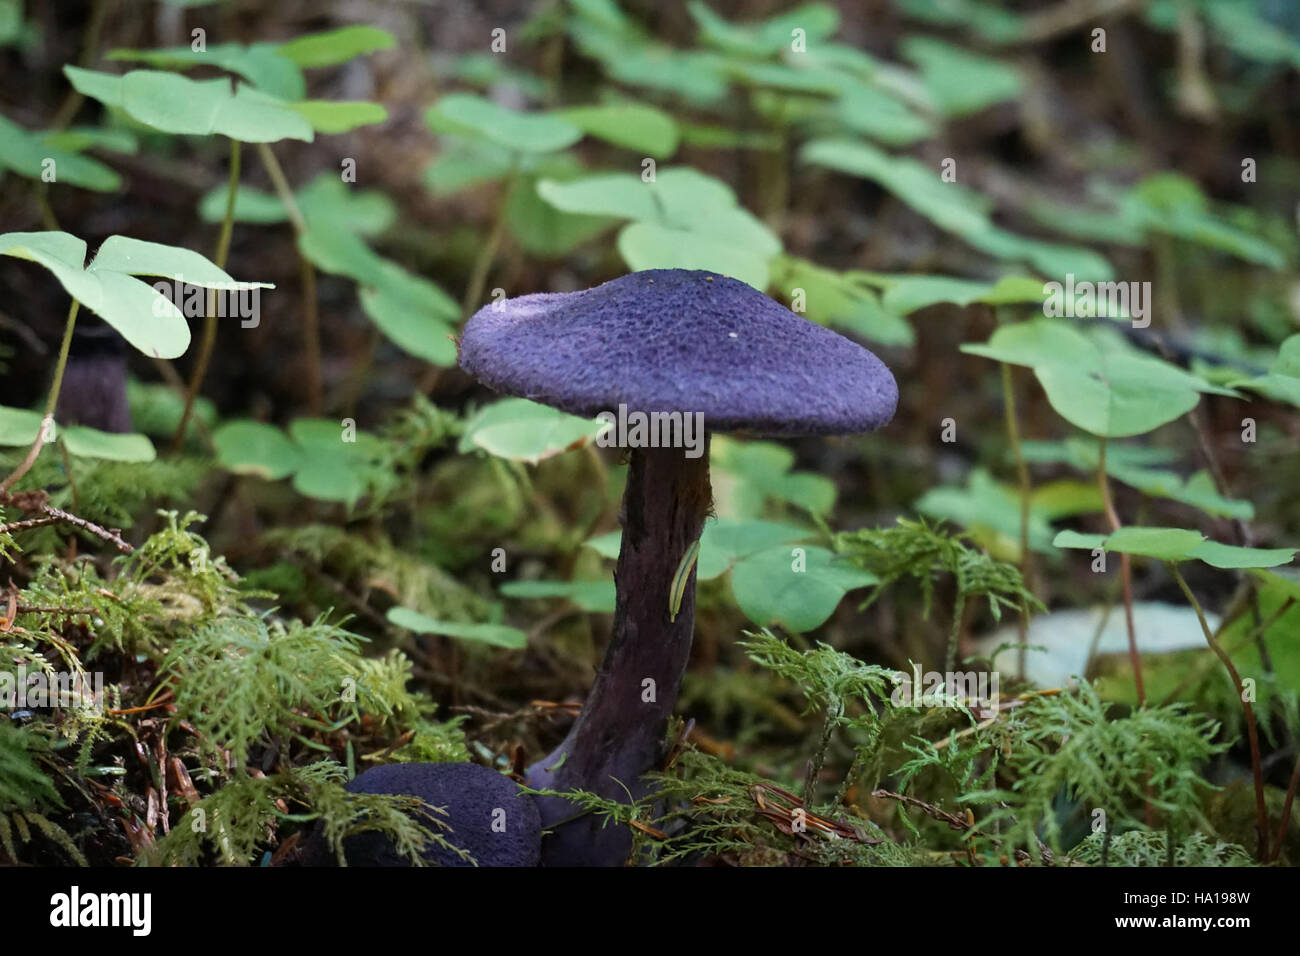 olympicnps 23060701352 violet cort mushrooms cortinarius violaceus purple fungus d archuleta 2015 Stock Photo